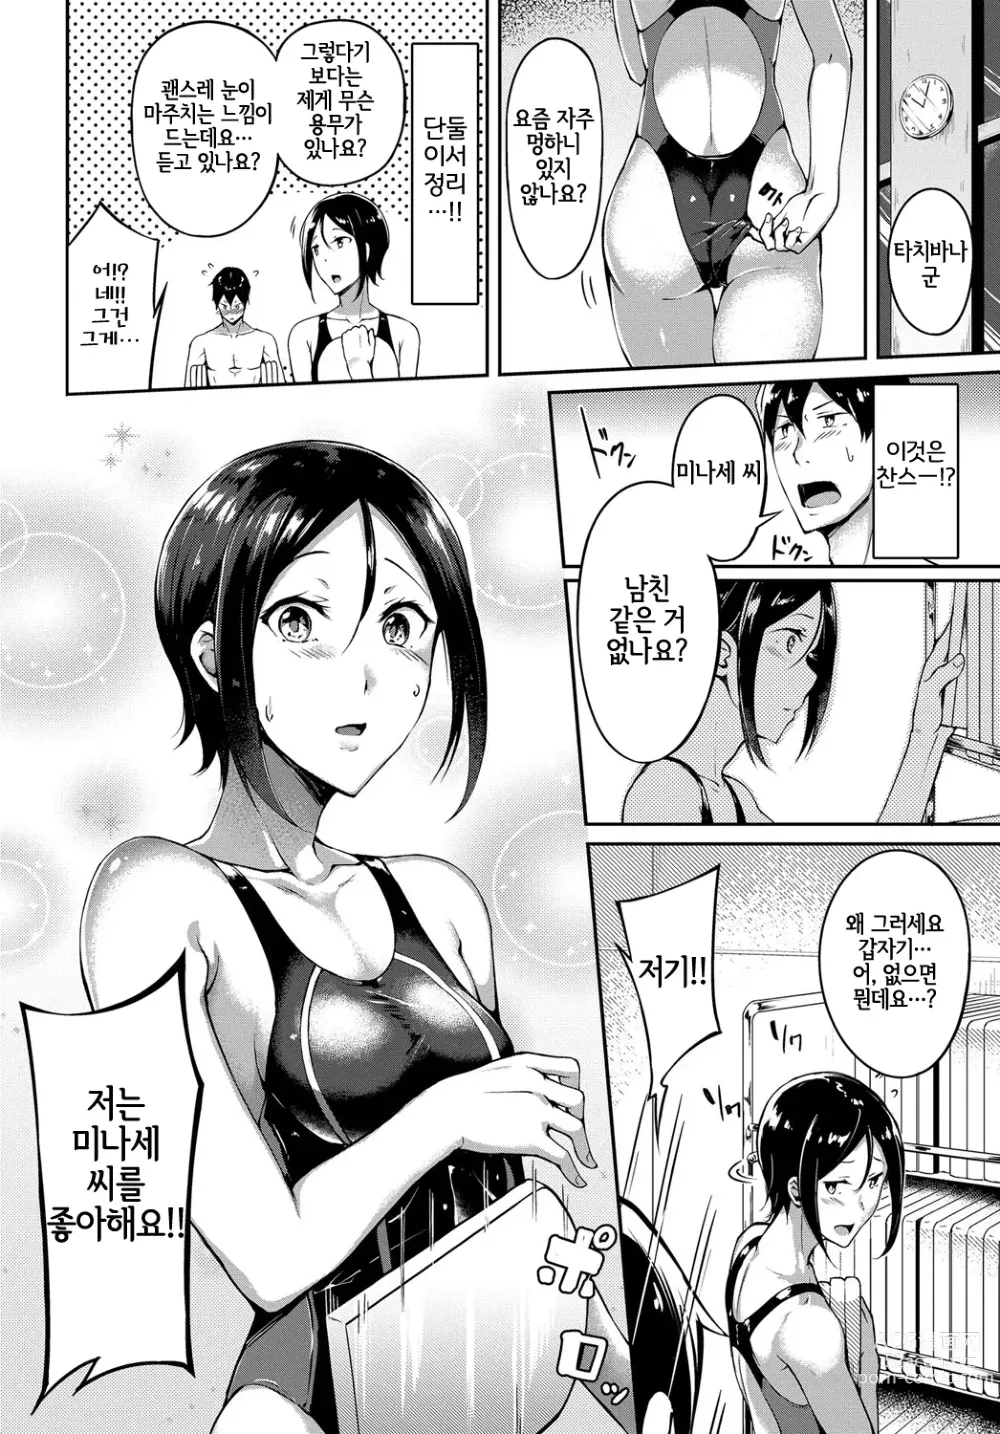 Page 4 of manga Poolside Love Patterns